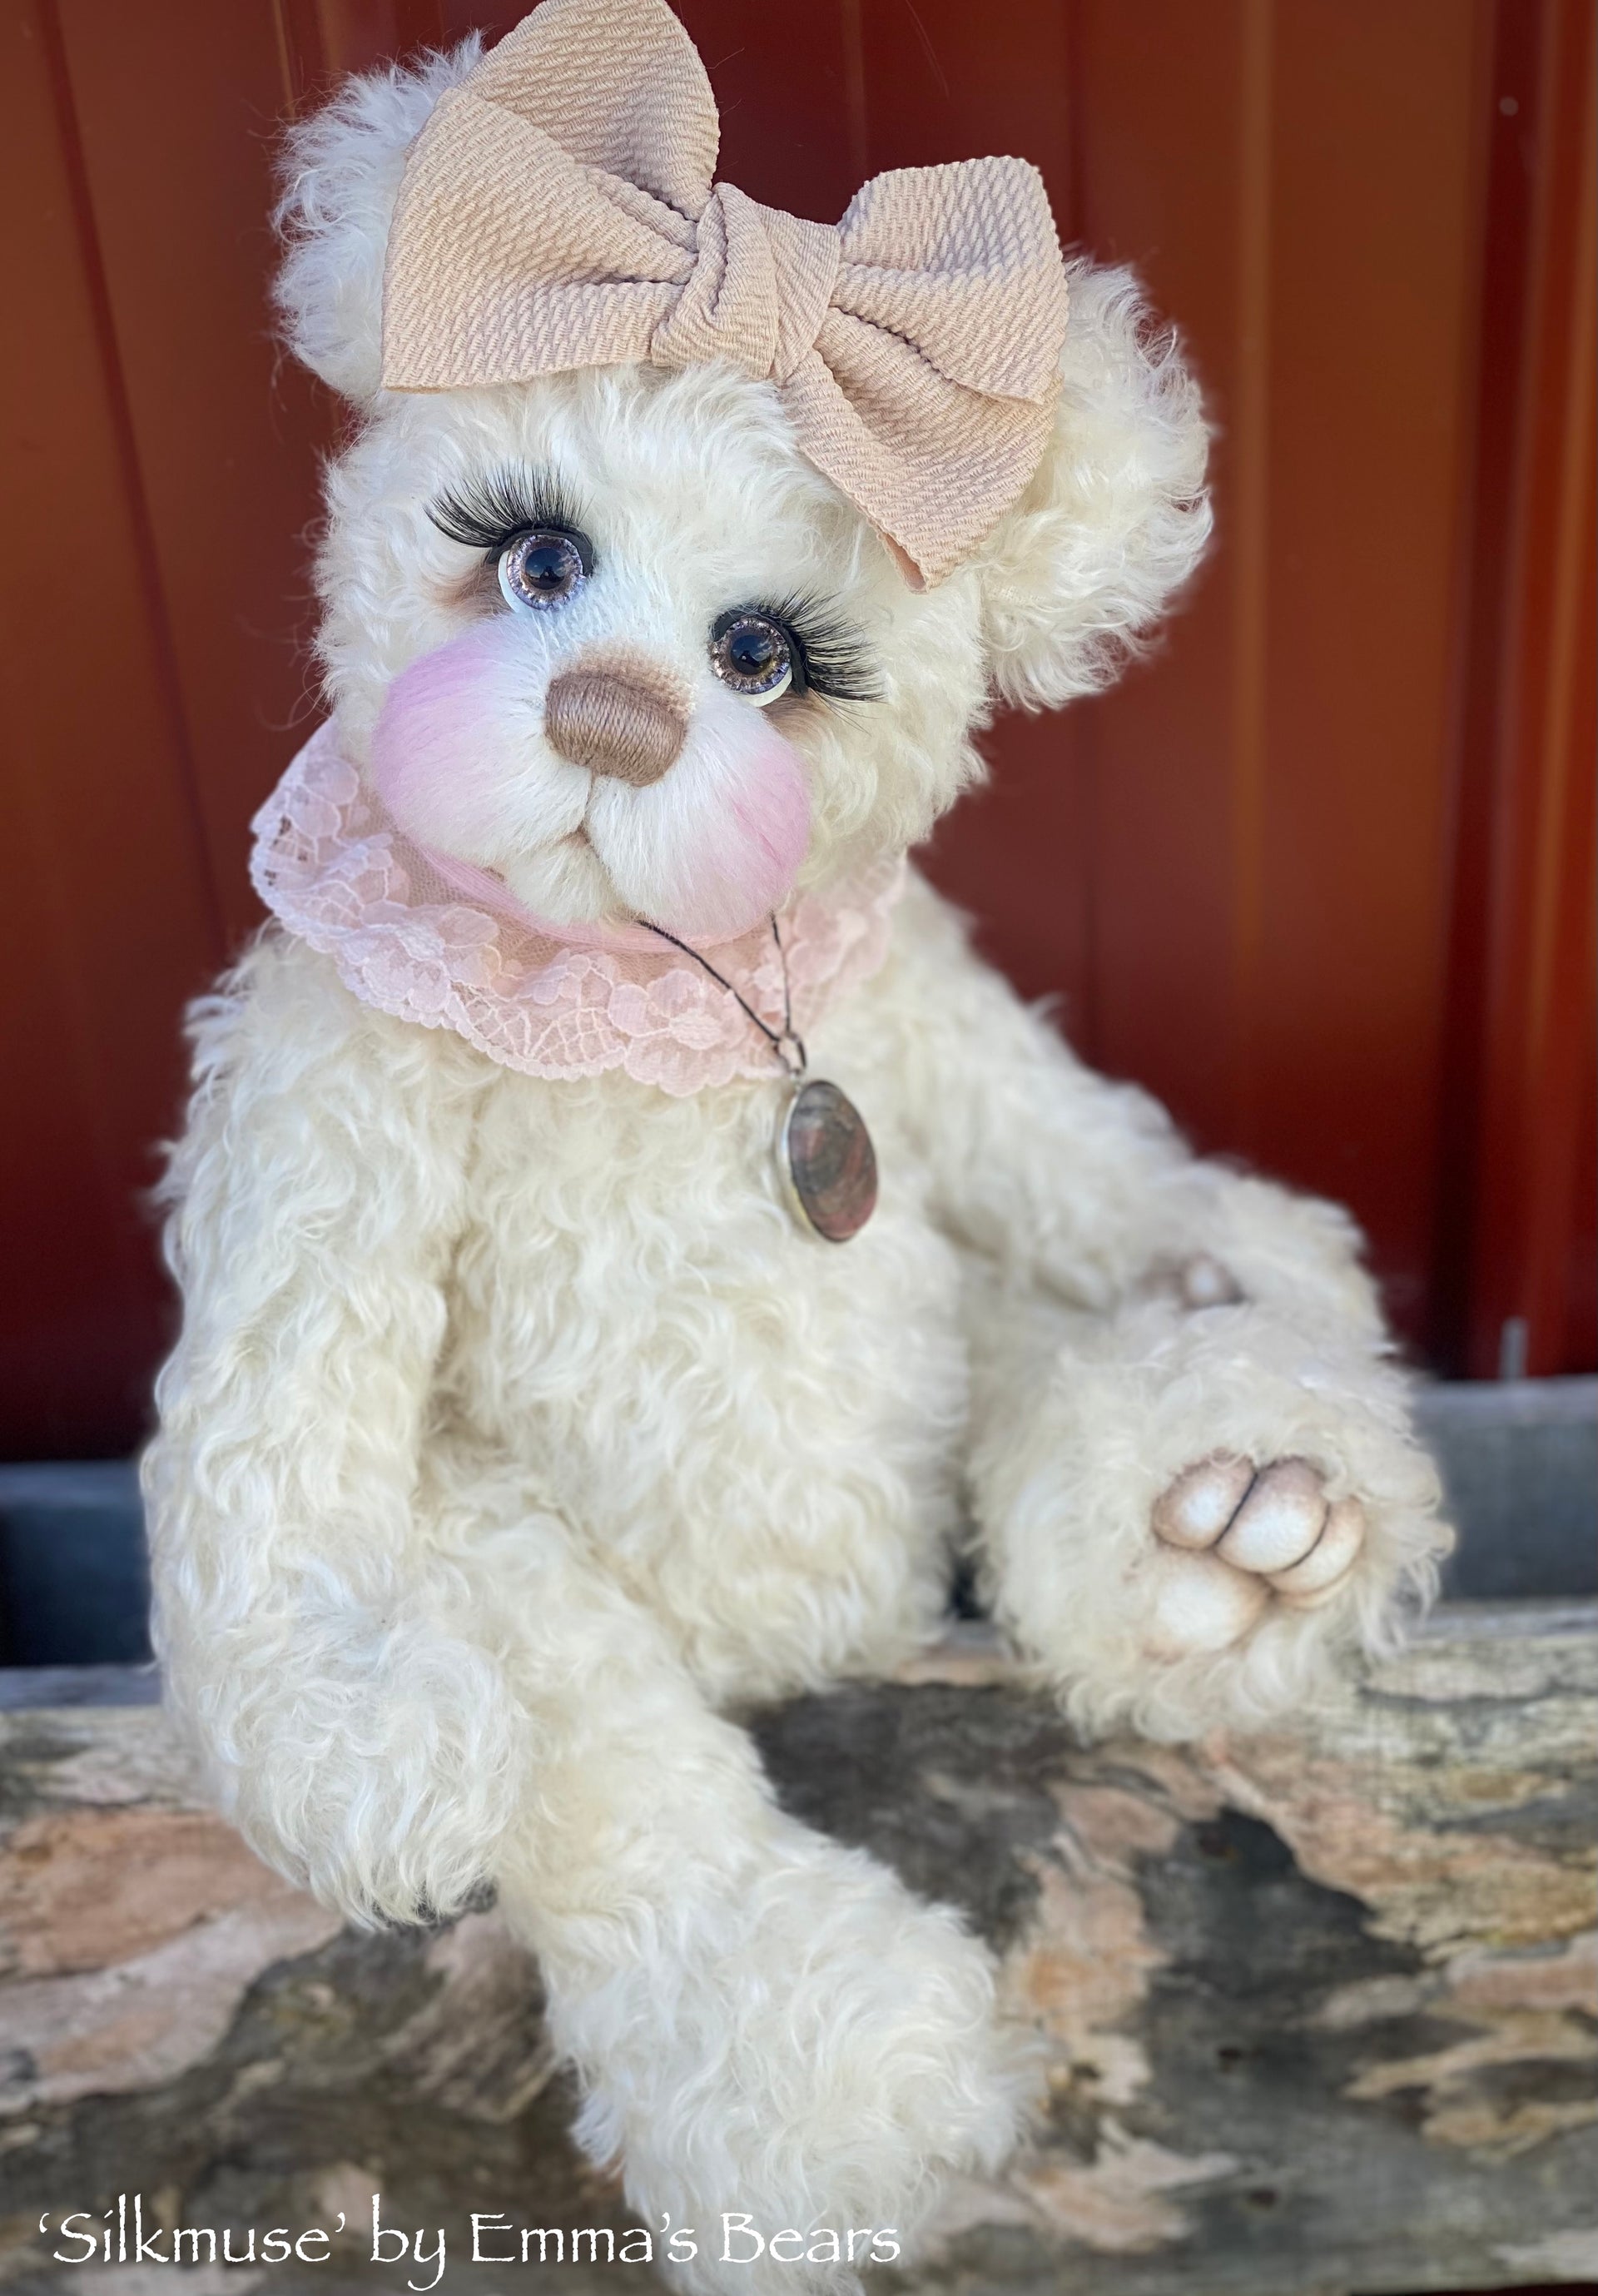 Silkmuse - 16" Curly Kid Mohair and Alpaca artist bear by Emma's Bears - OOAK